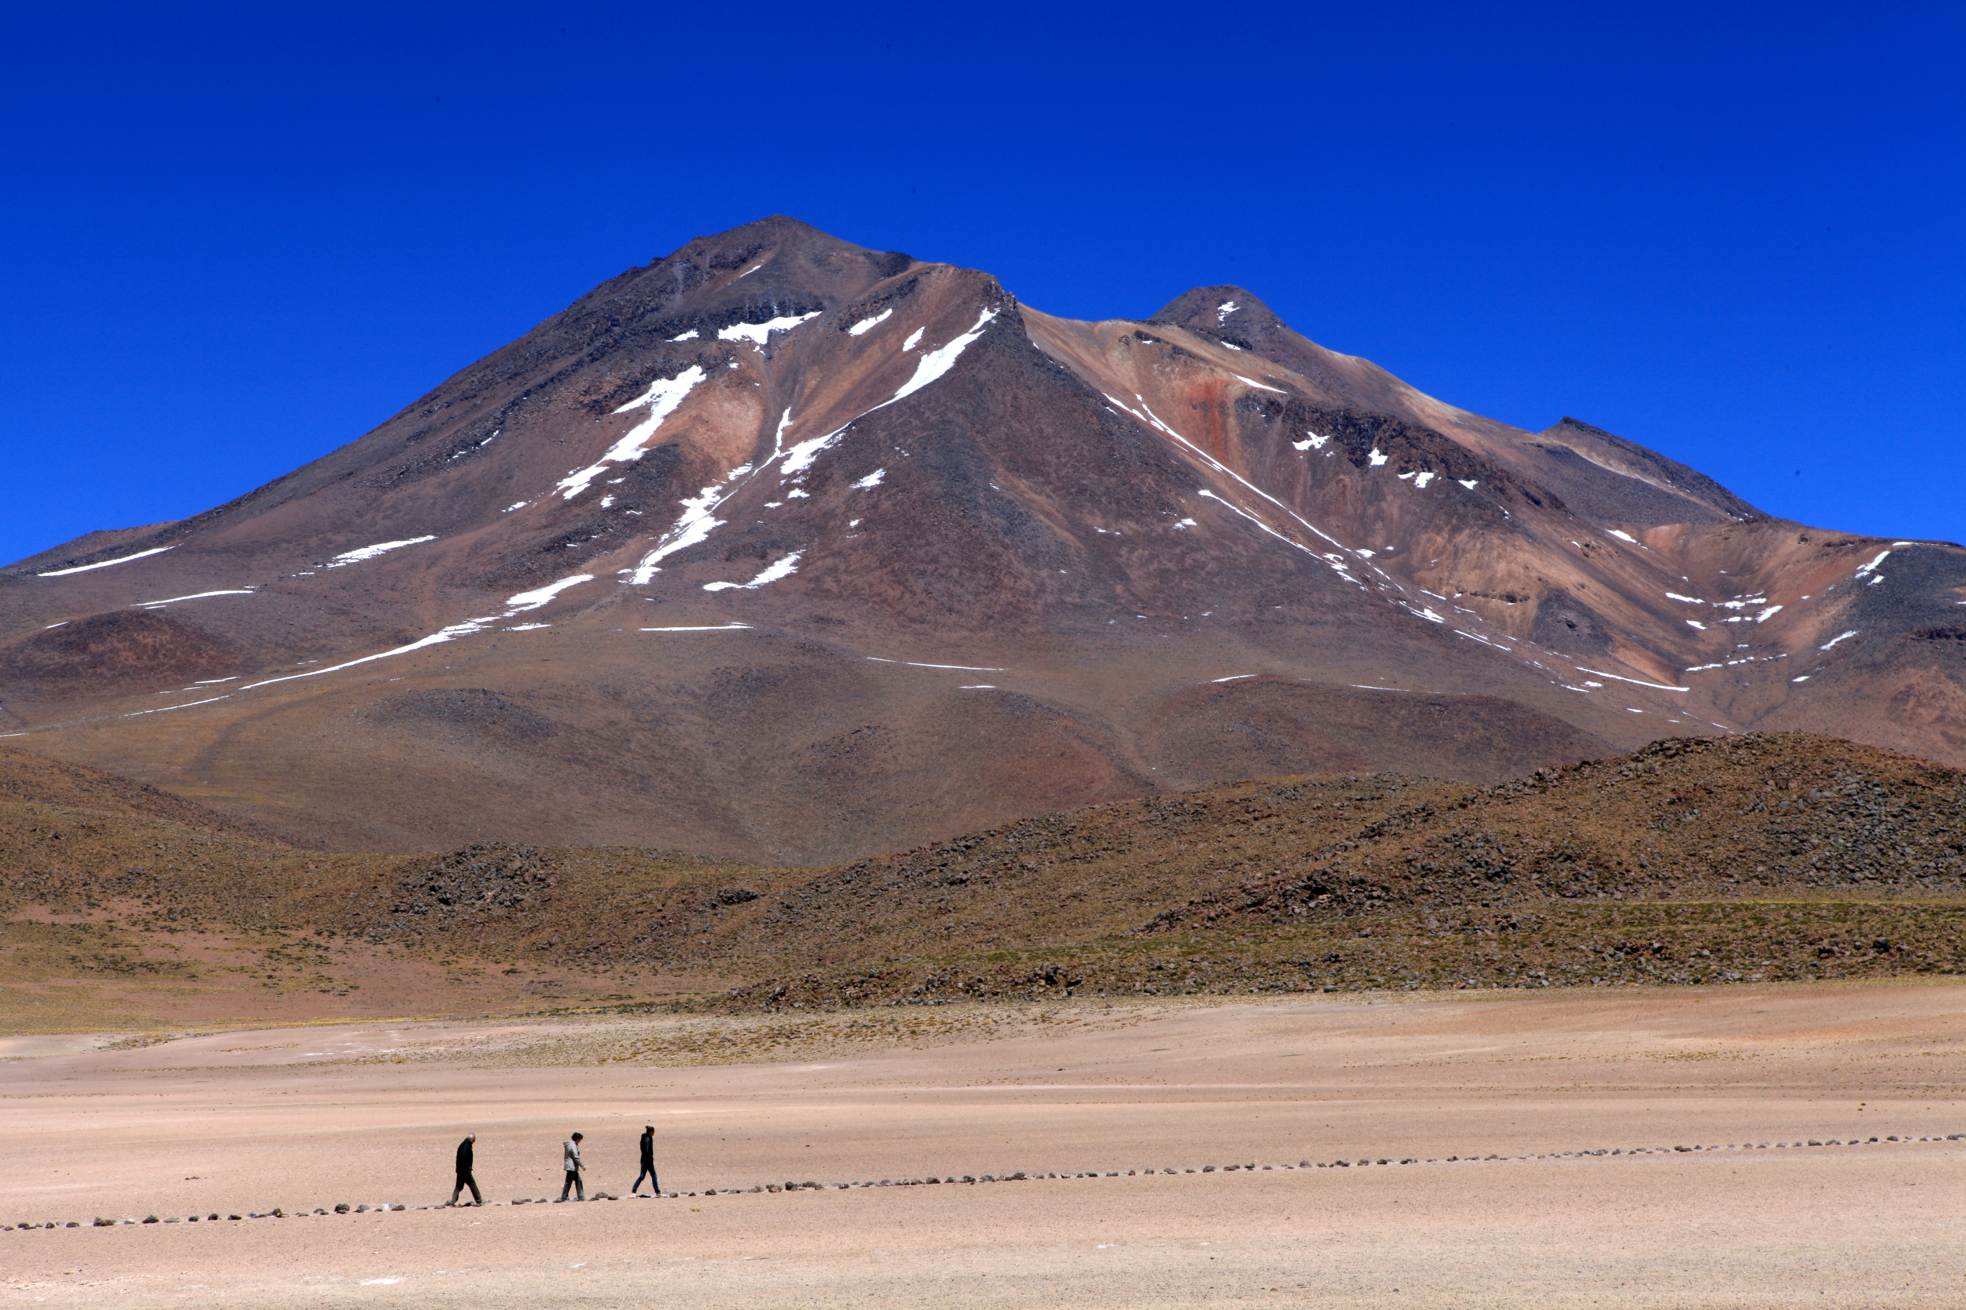   Meniques Vulkan, Atacama-Wüste, Chile  